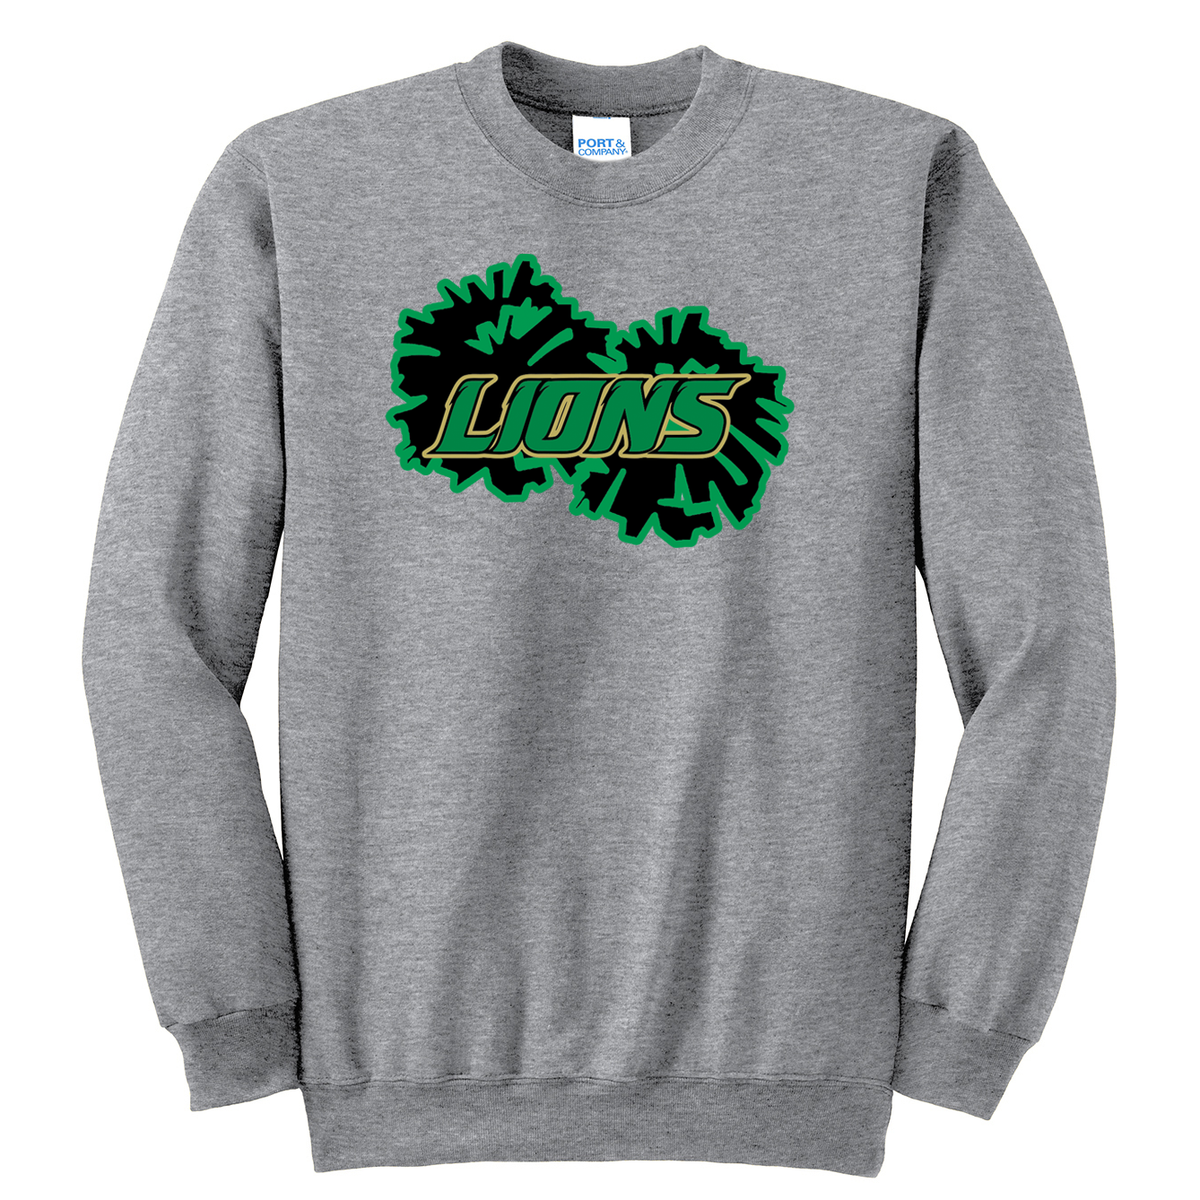 Lanierland Lions Cheer Crew Neck Sweater